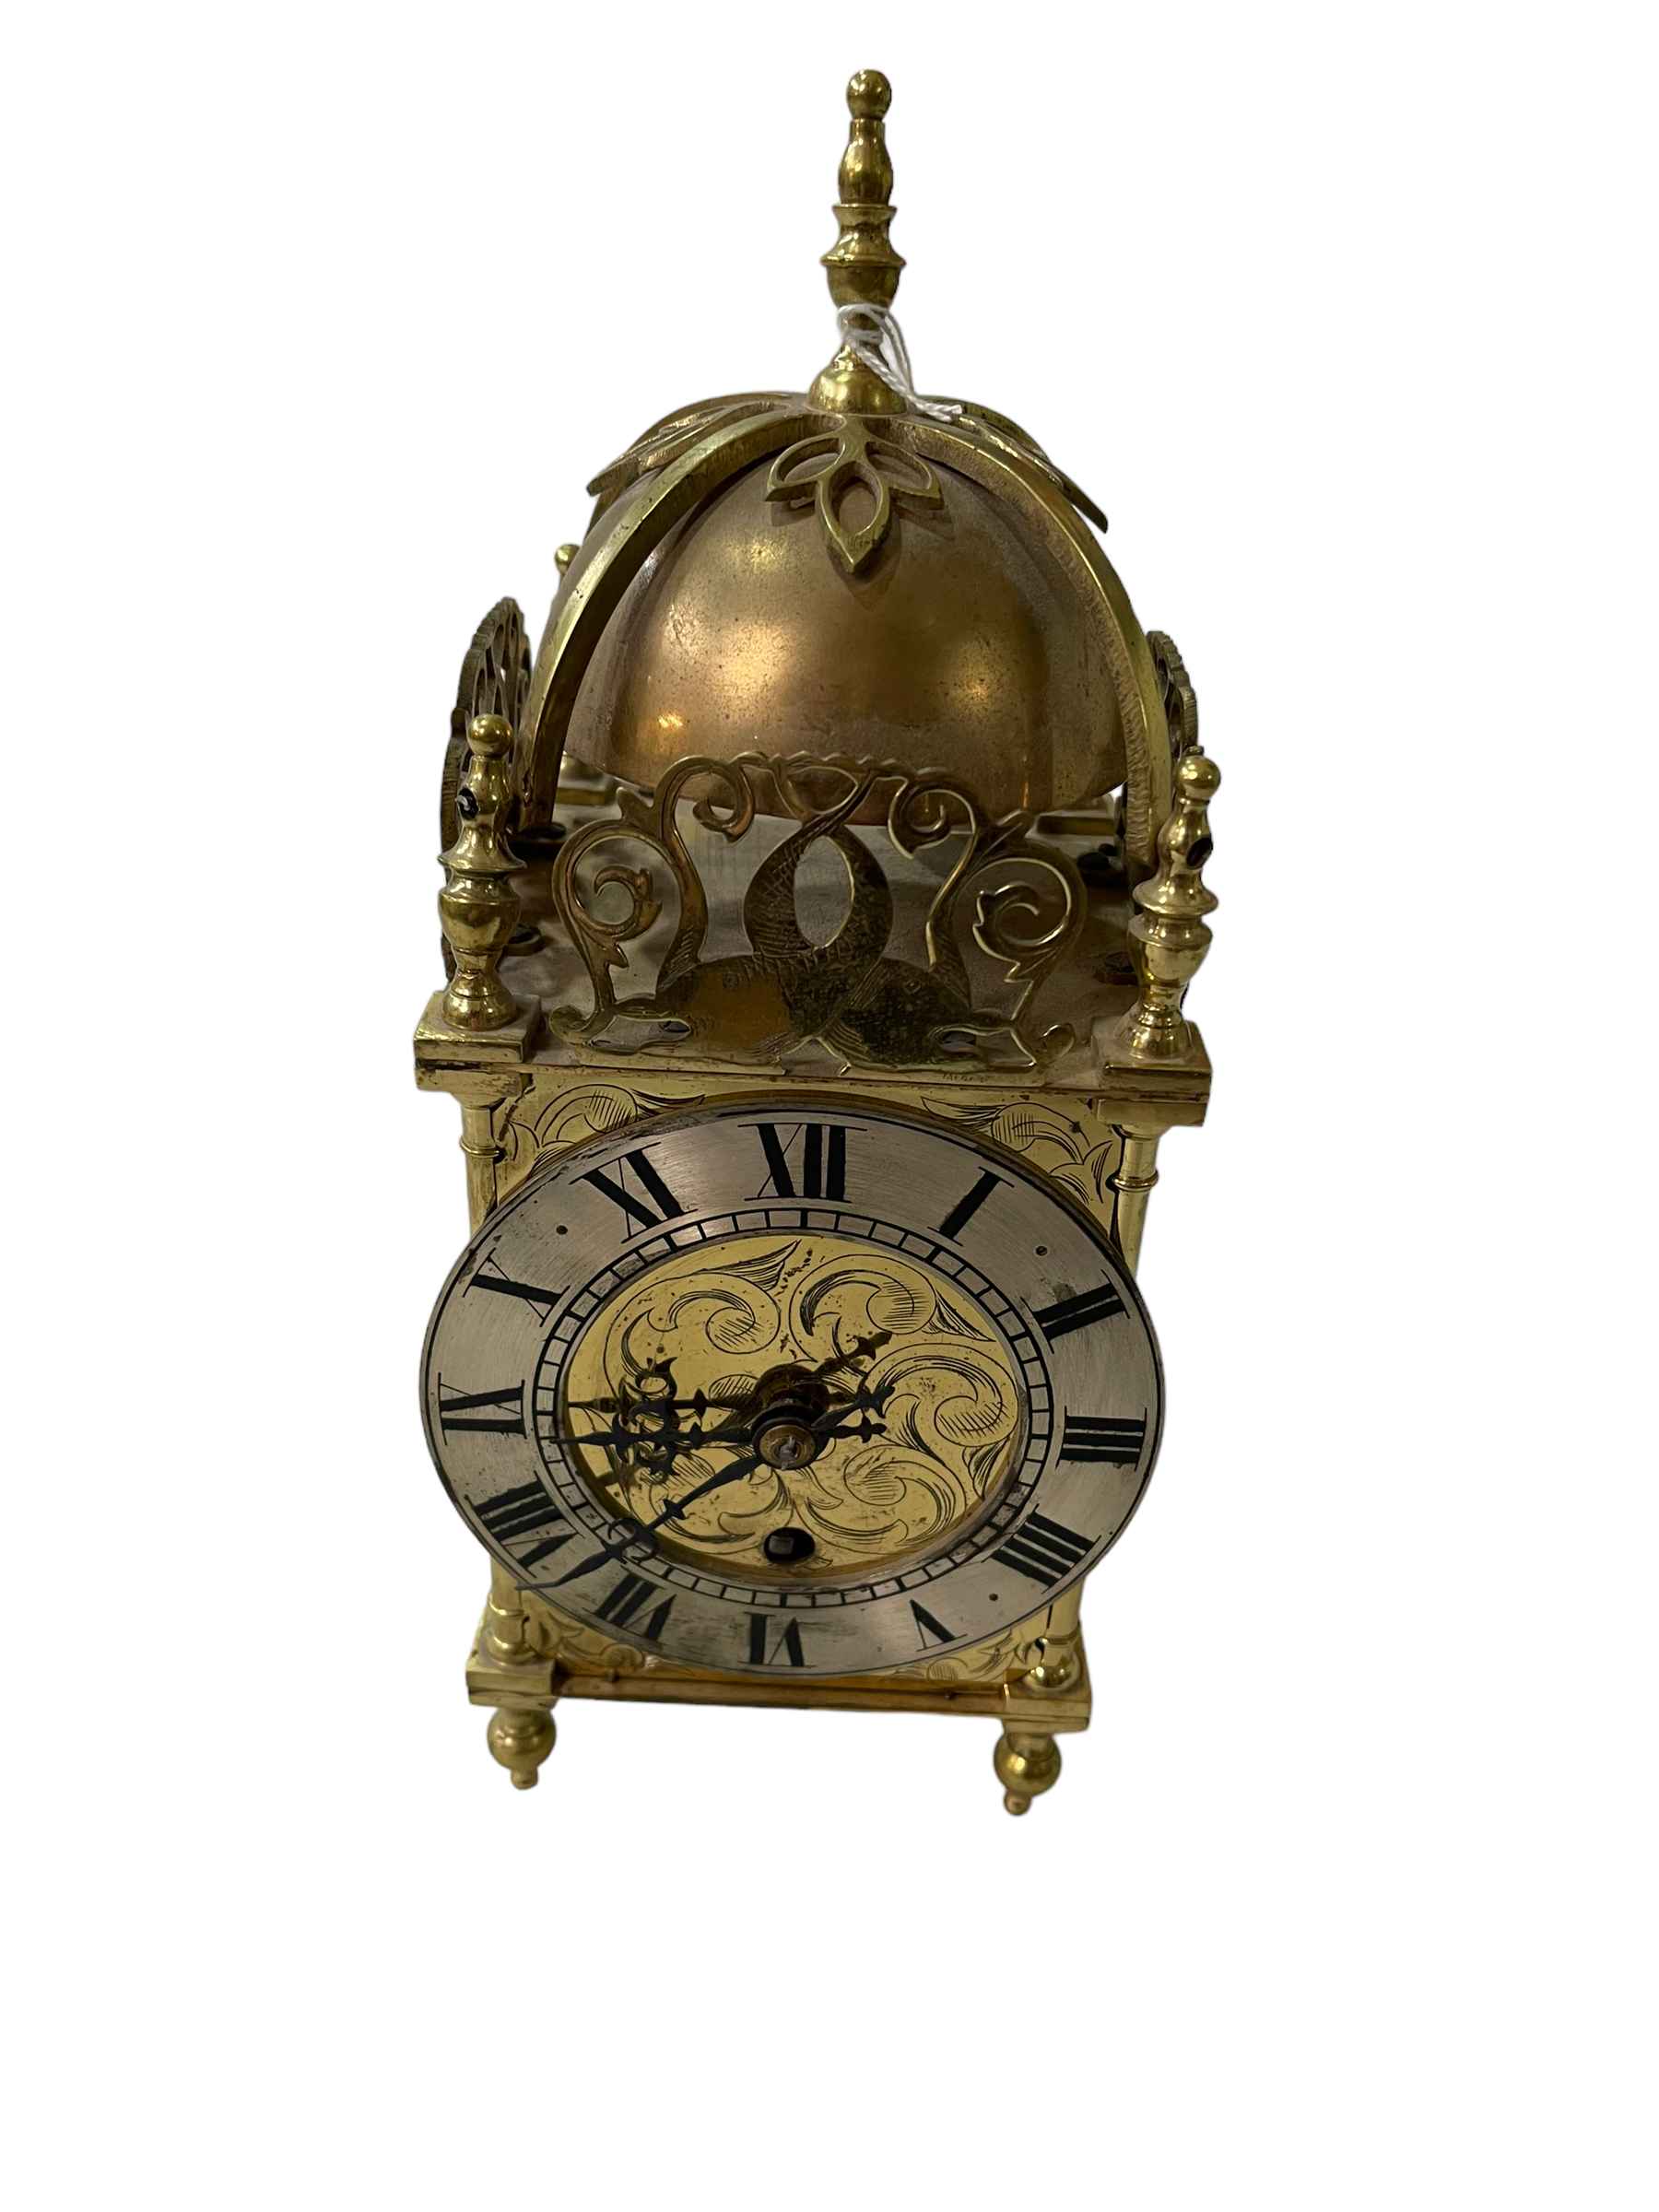 Replica brass lantern clock, 29cm.